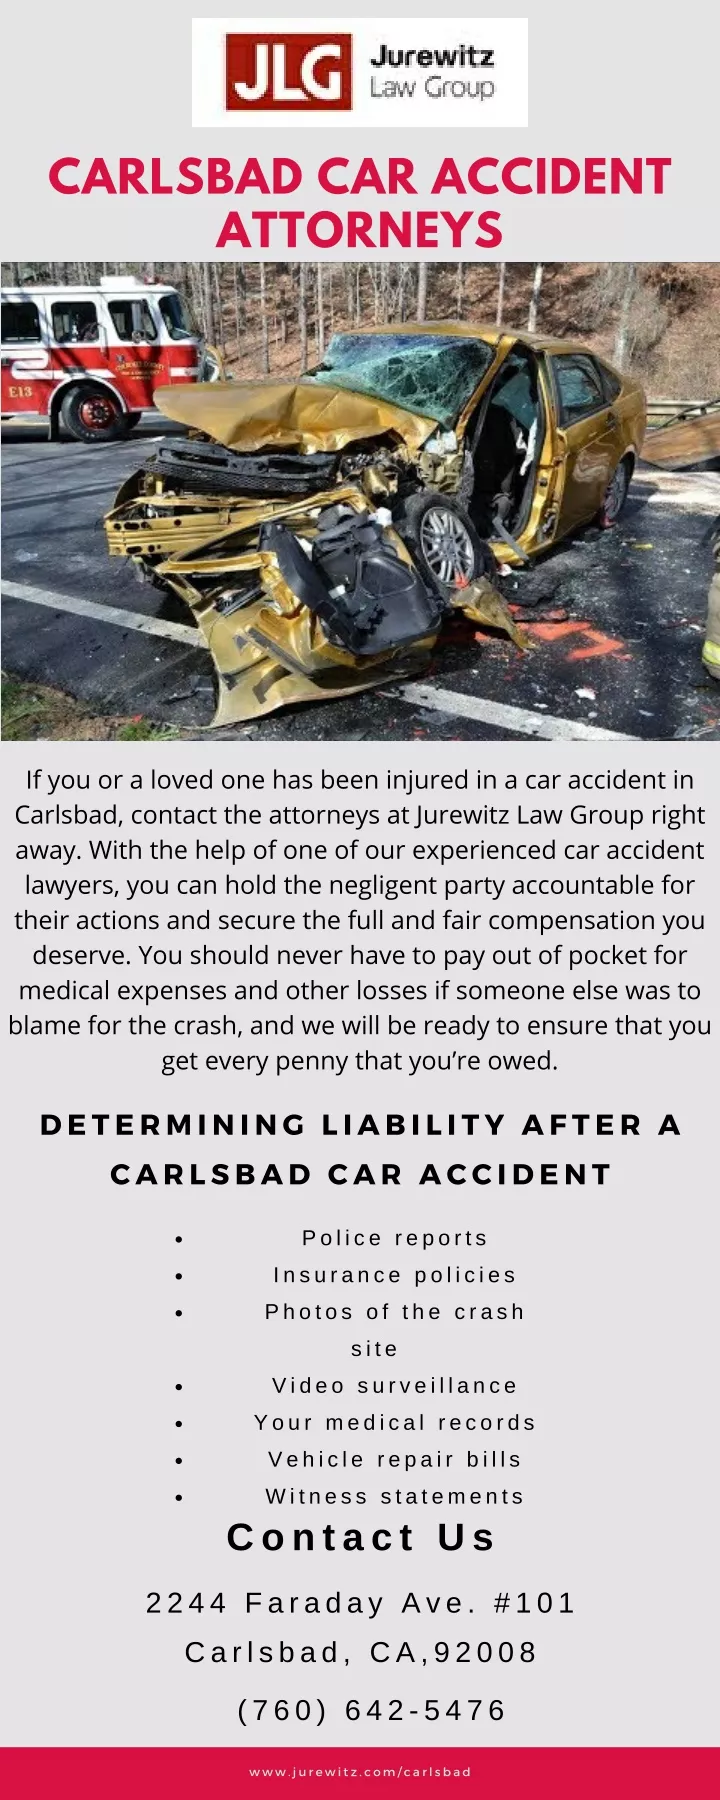 carlsbad car accident attorneys